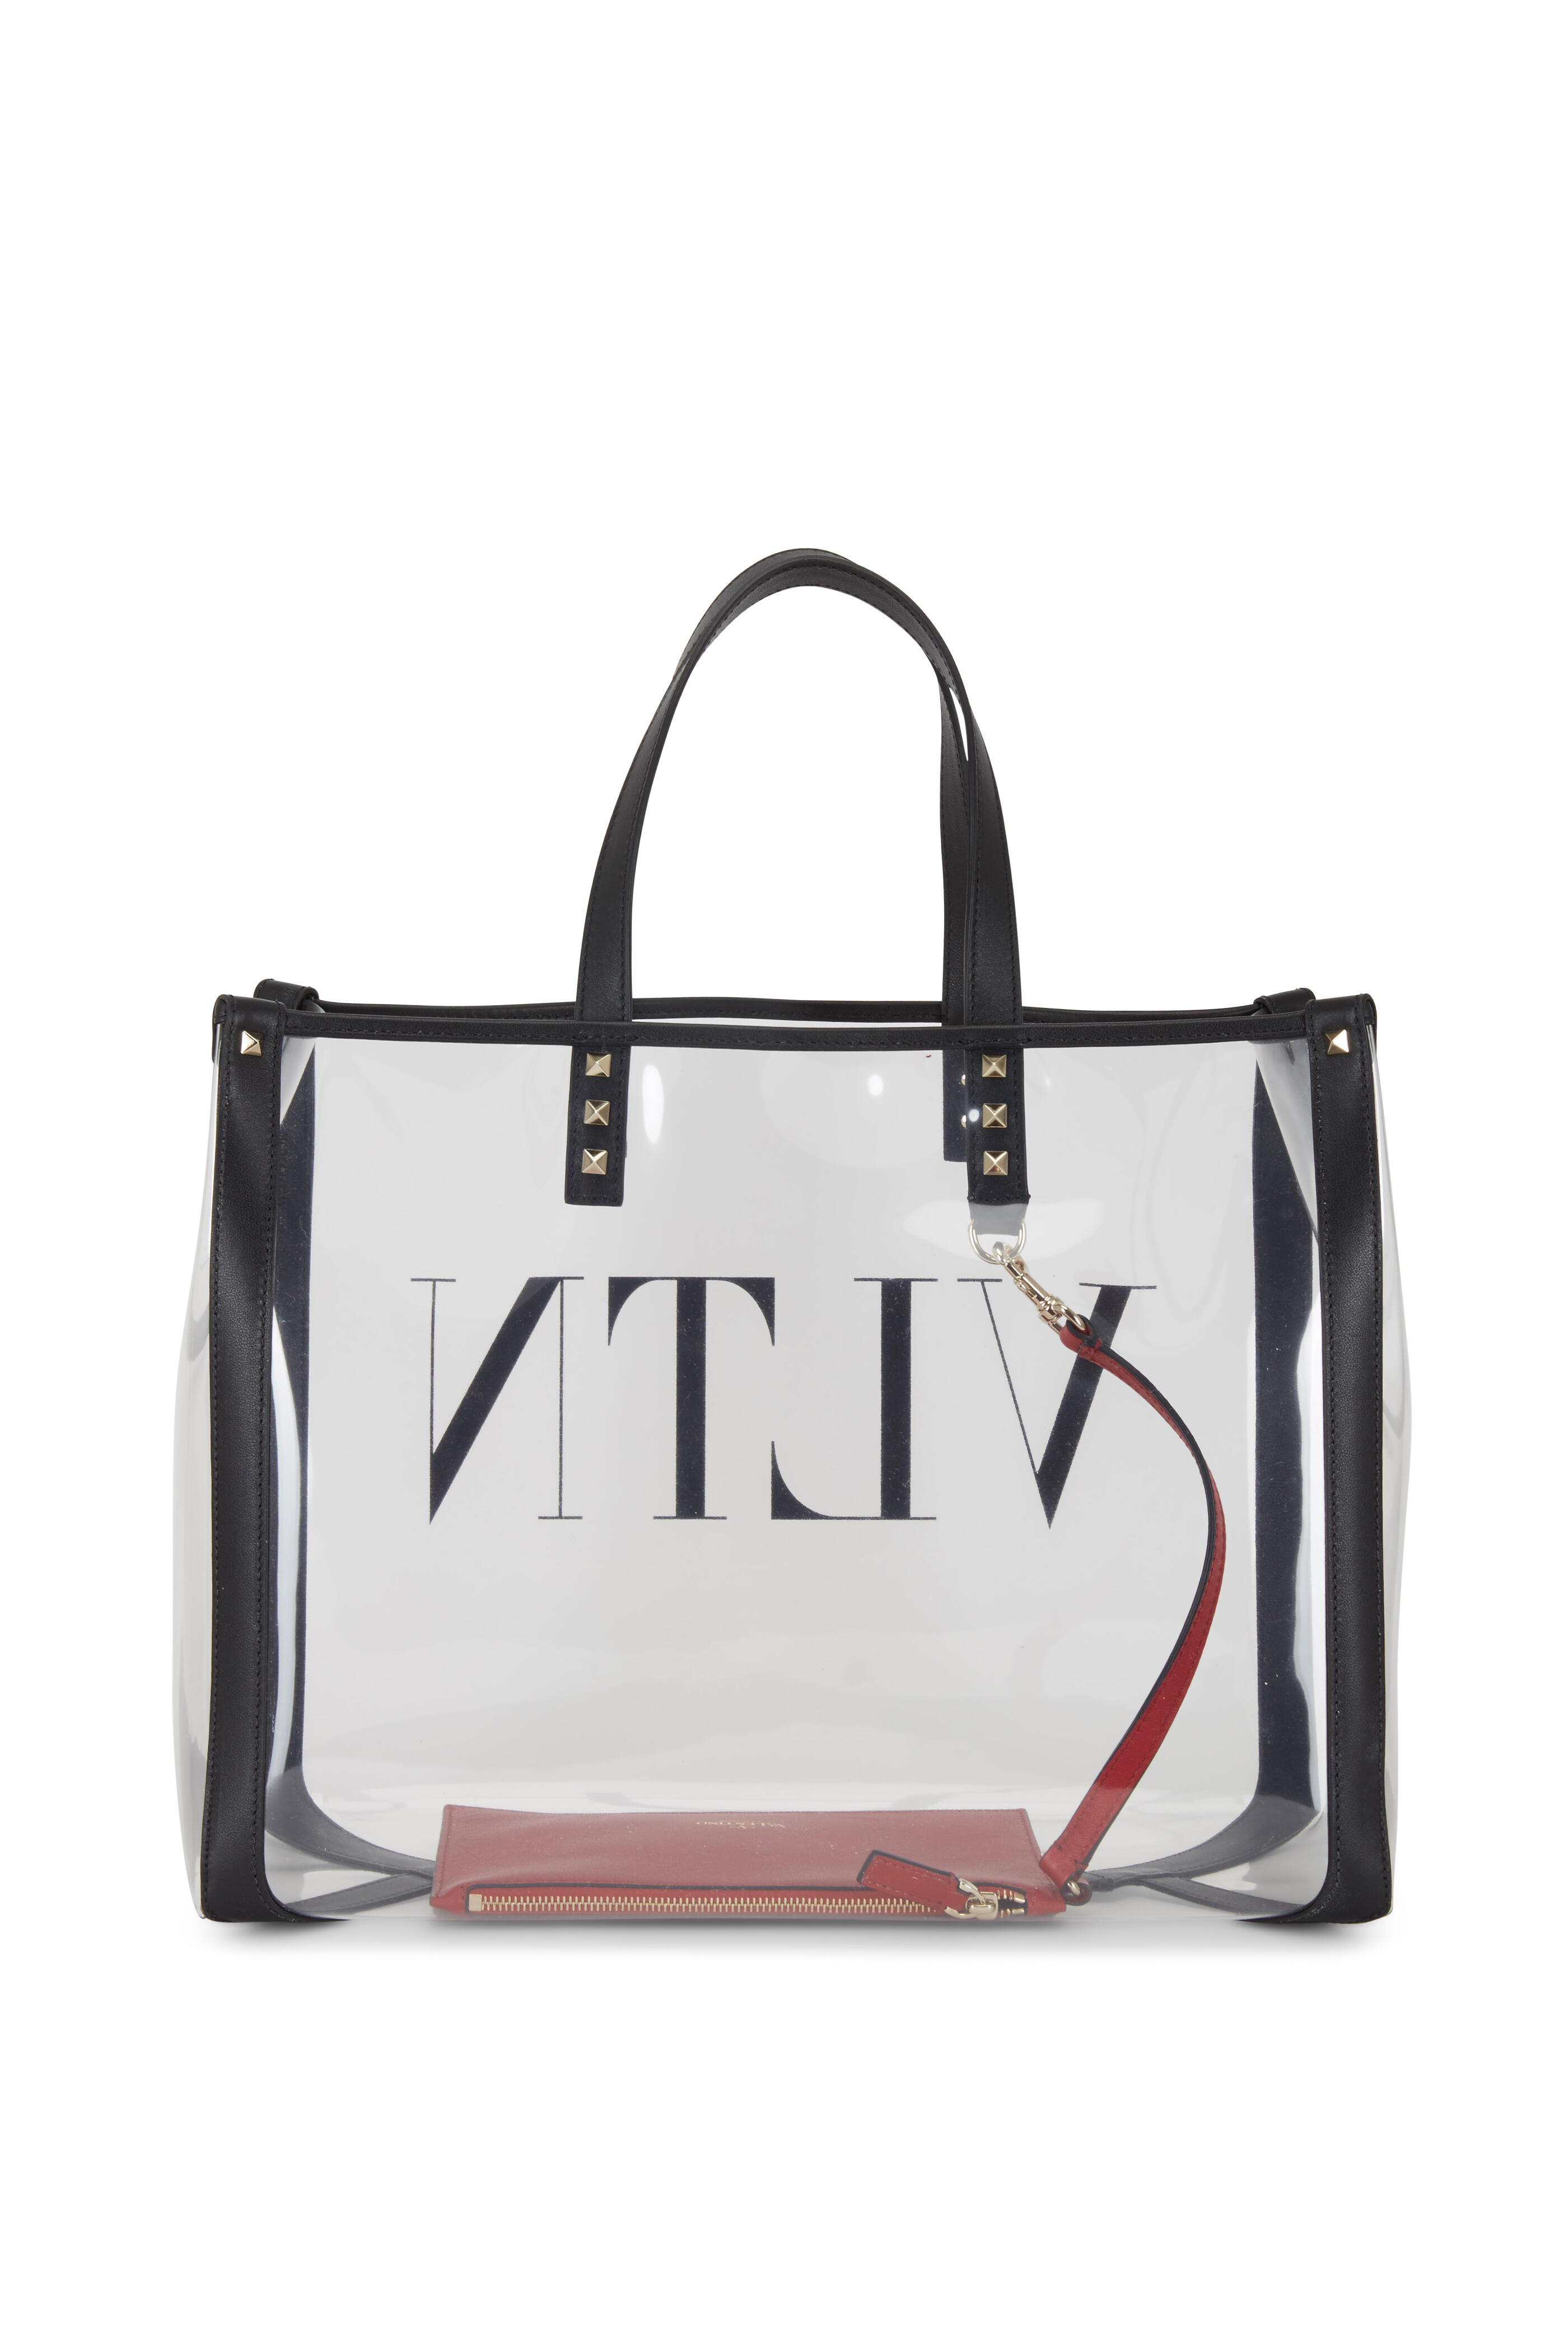 Valentino Garavani Rockstud-embellishment Tote Bag